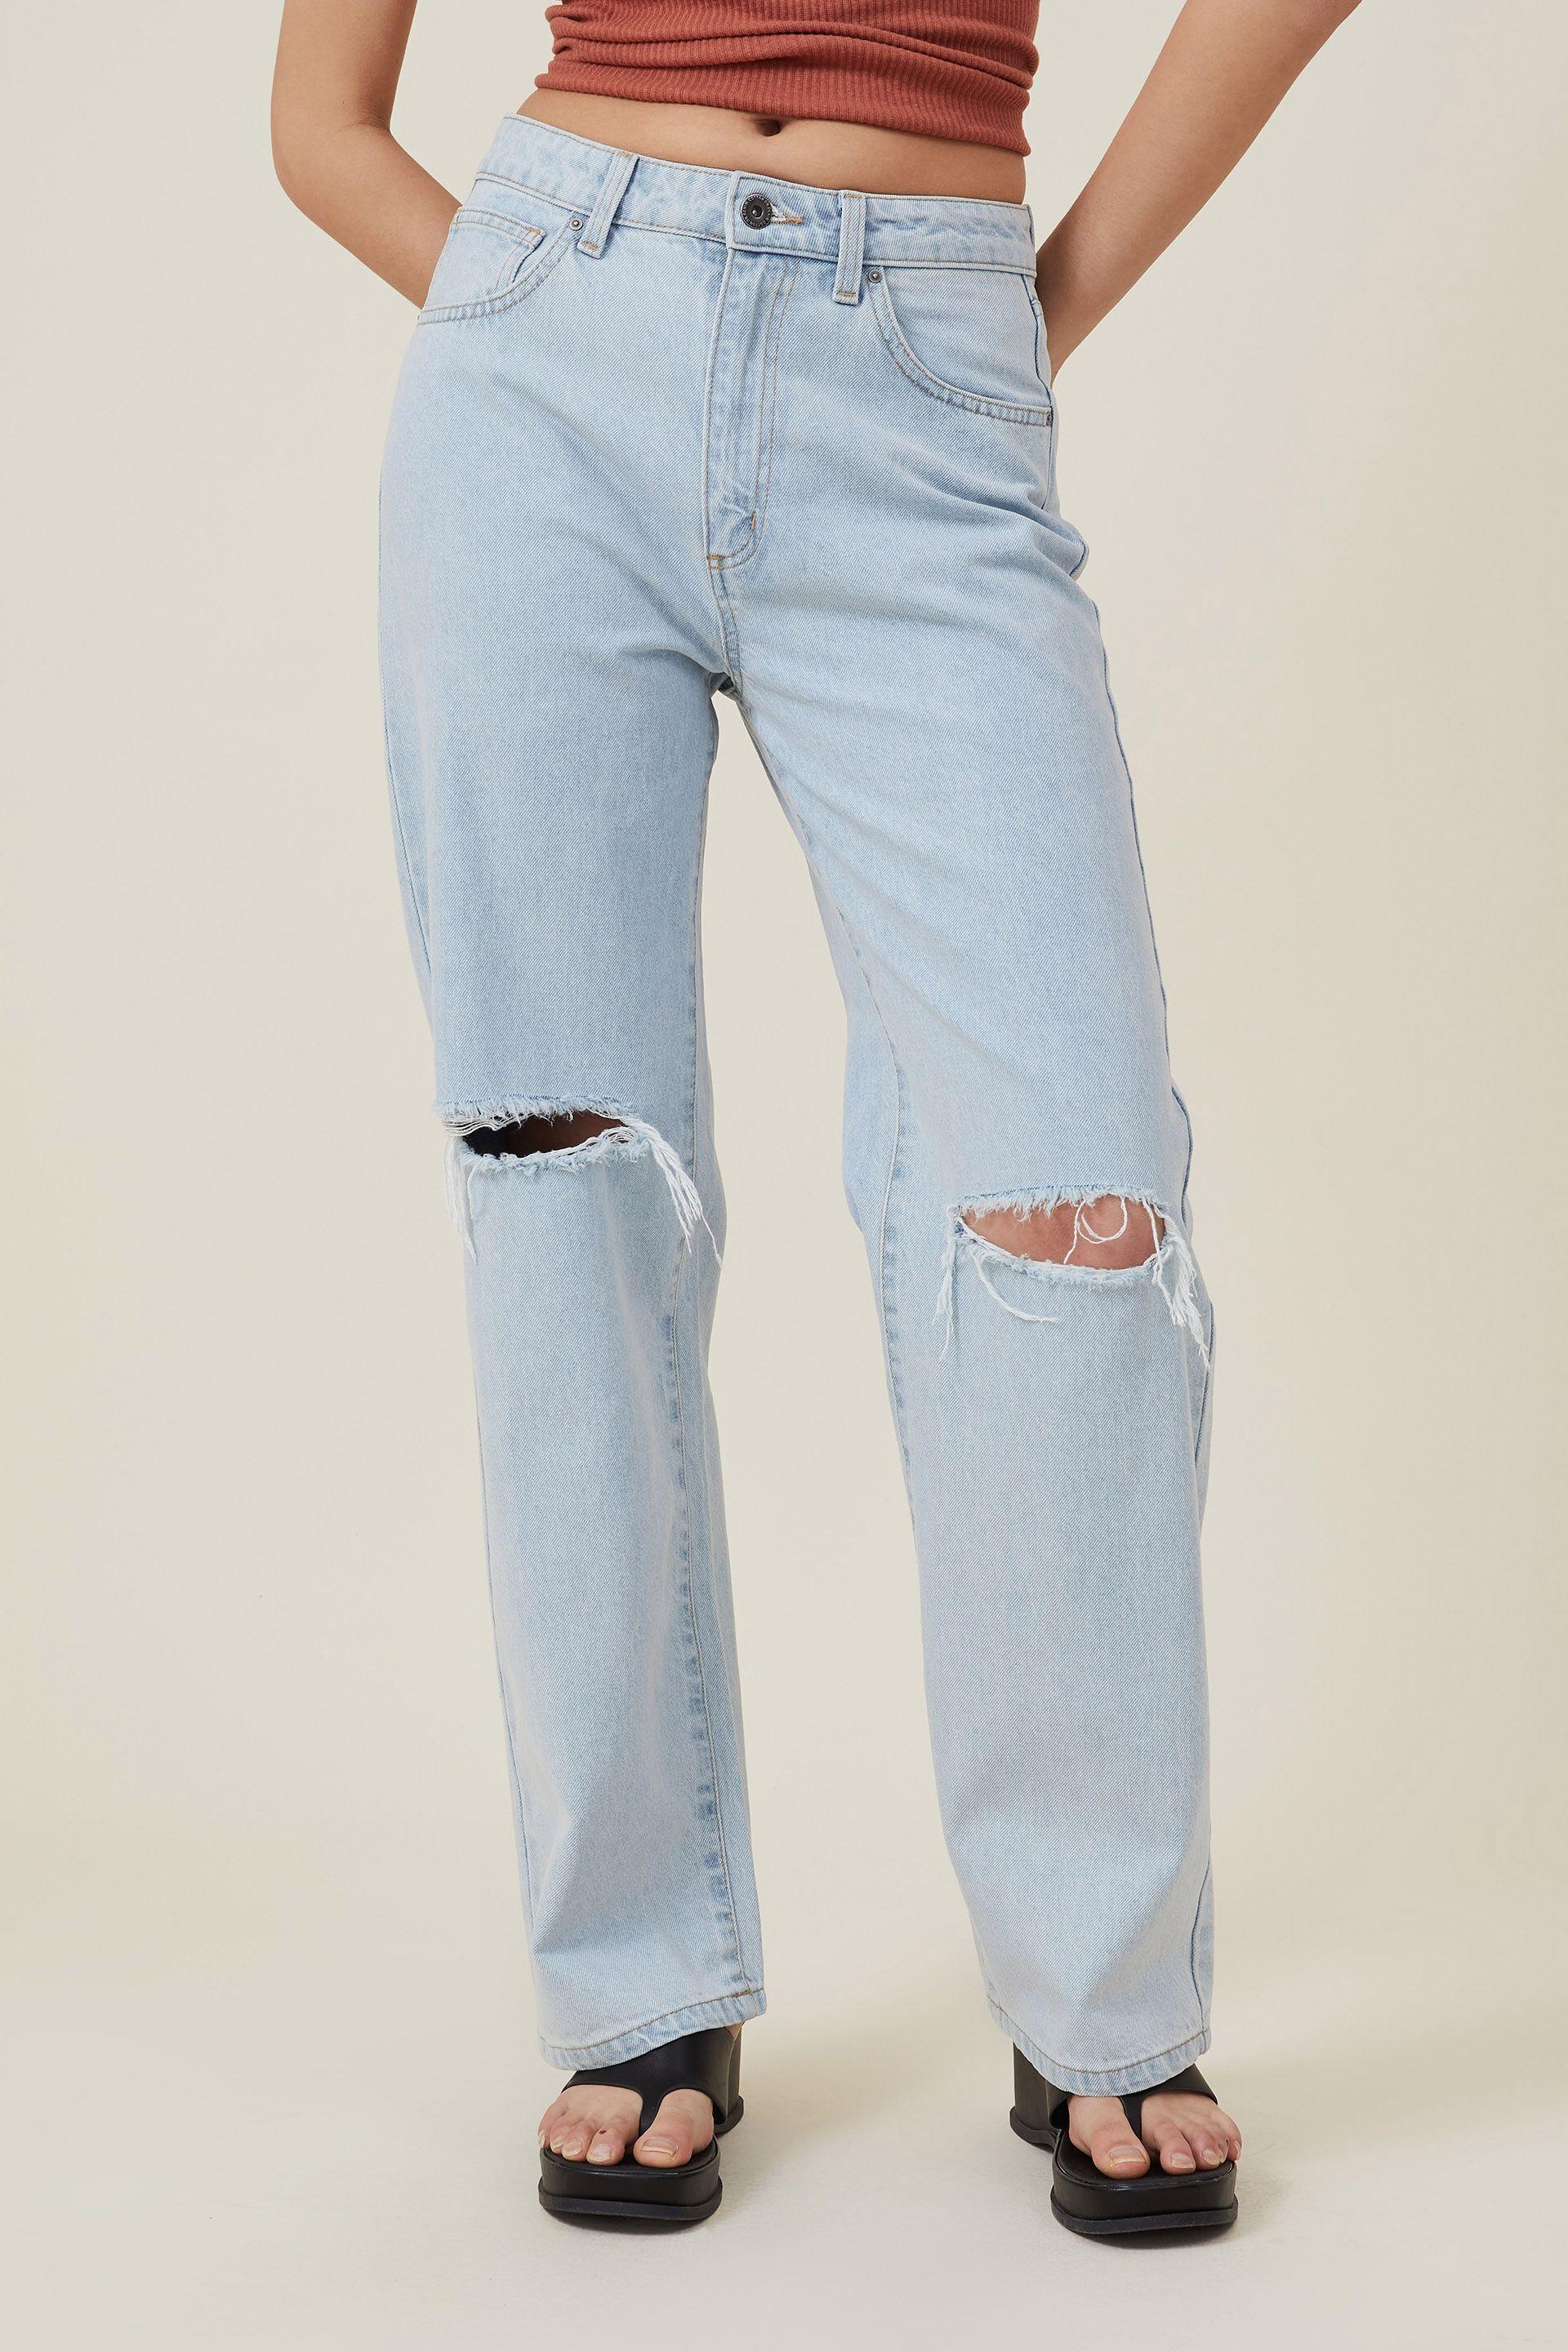 Loose straight jean - foam blue rip Cotton On Jeans | Superbalist.com